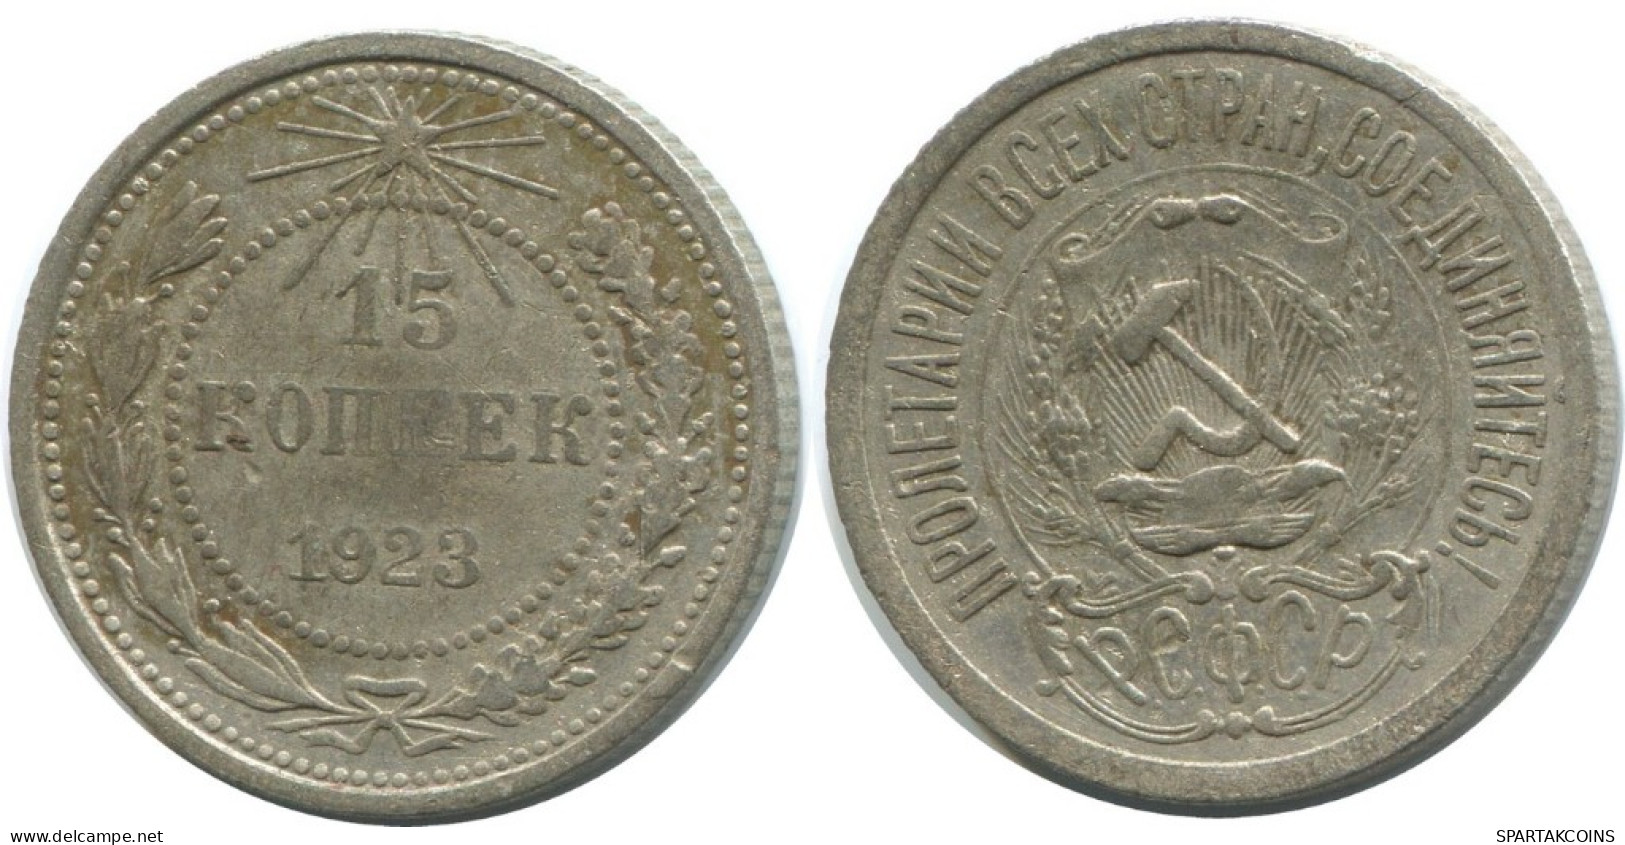 15 KOPEKS 1923 RUSSIA RSFSR SILVER Coin HIGH GRADE #AF098.4.U.A - Russia